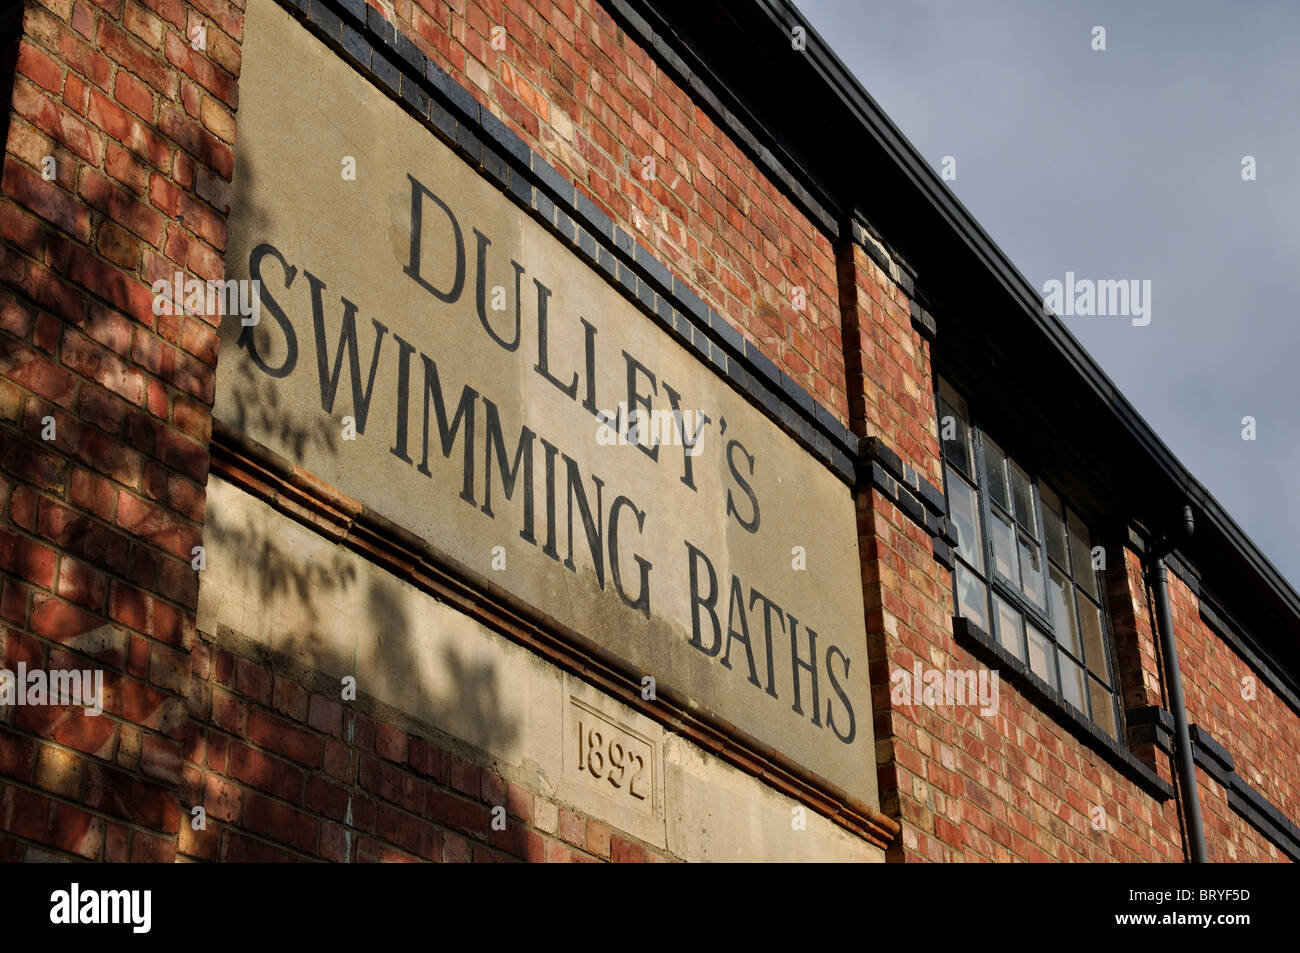 Dulley Piscinas del signo, Wellingborough, Northamptonshire, Inglaterra, Reino Unido. Foto de stock